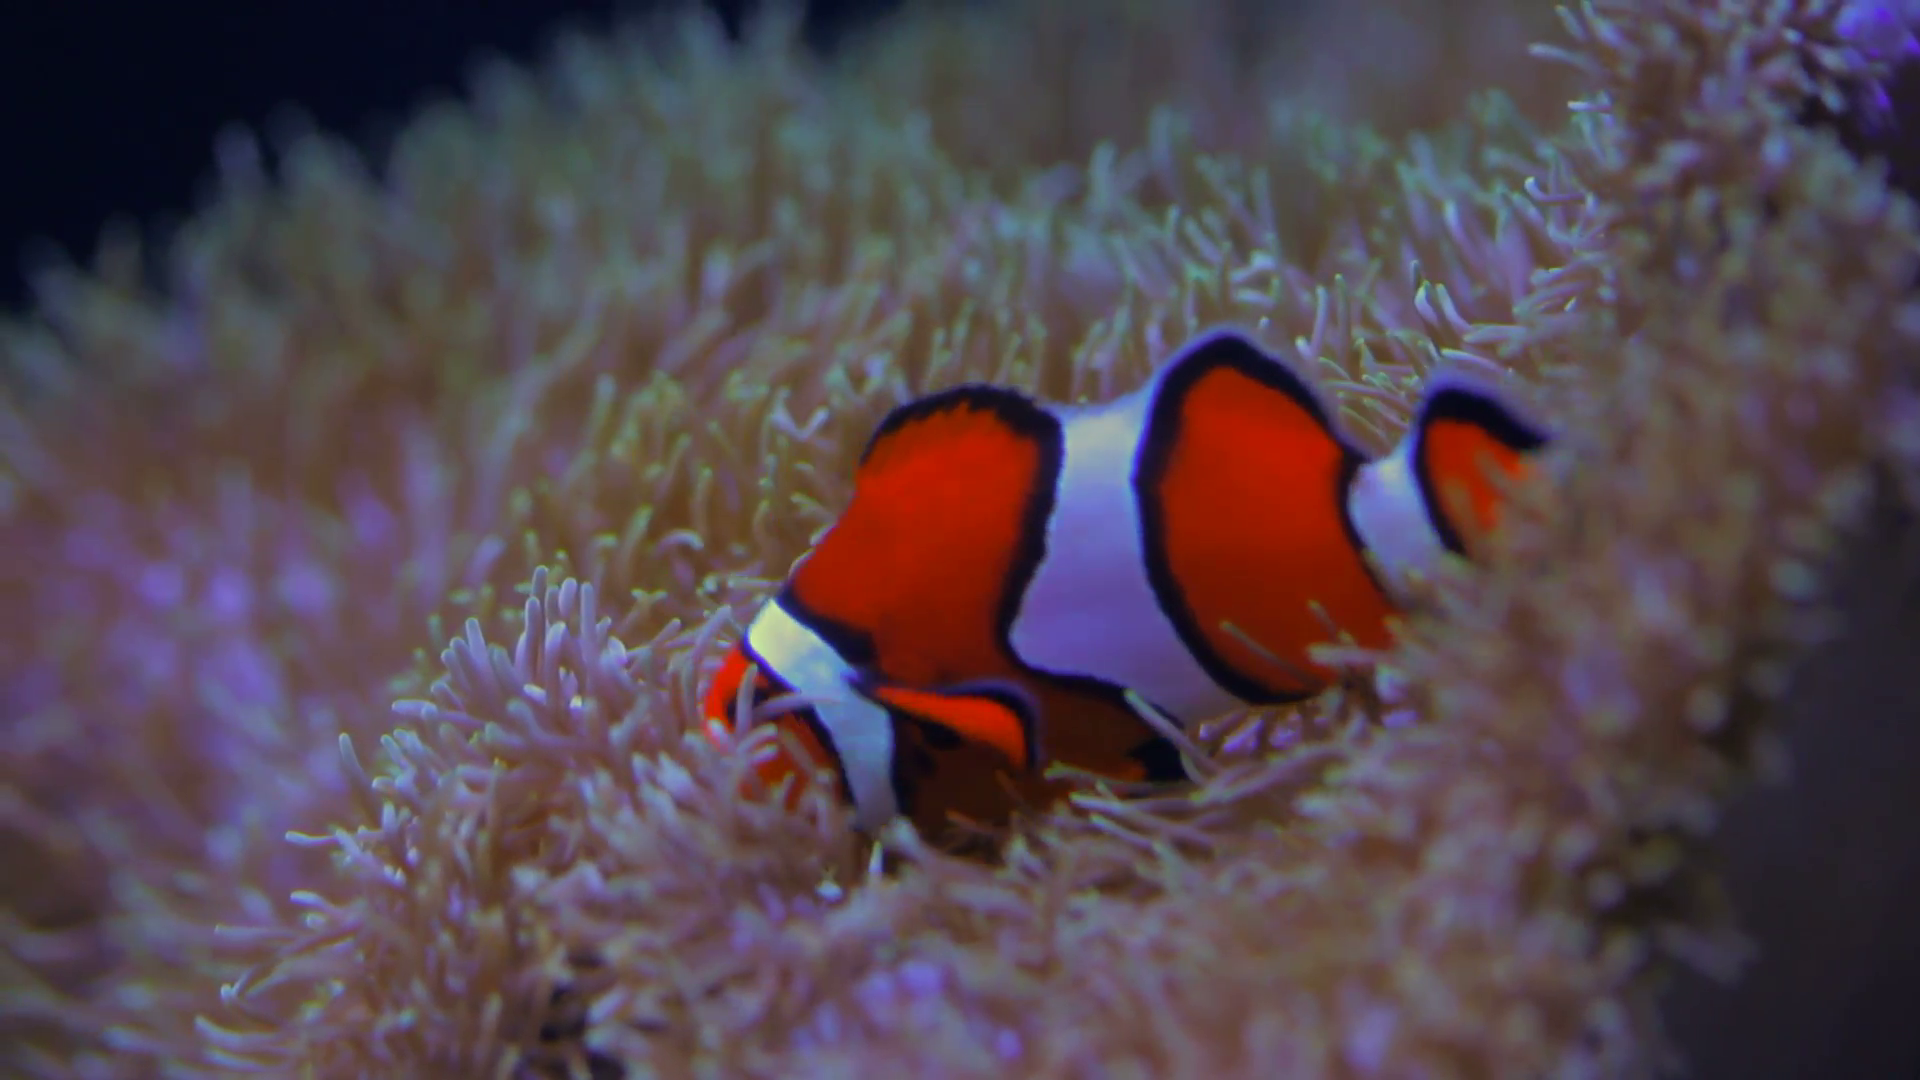 Tropical Fish Clownfish v3 A clownfish swimming Shallow depth of ...